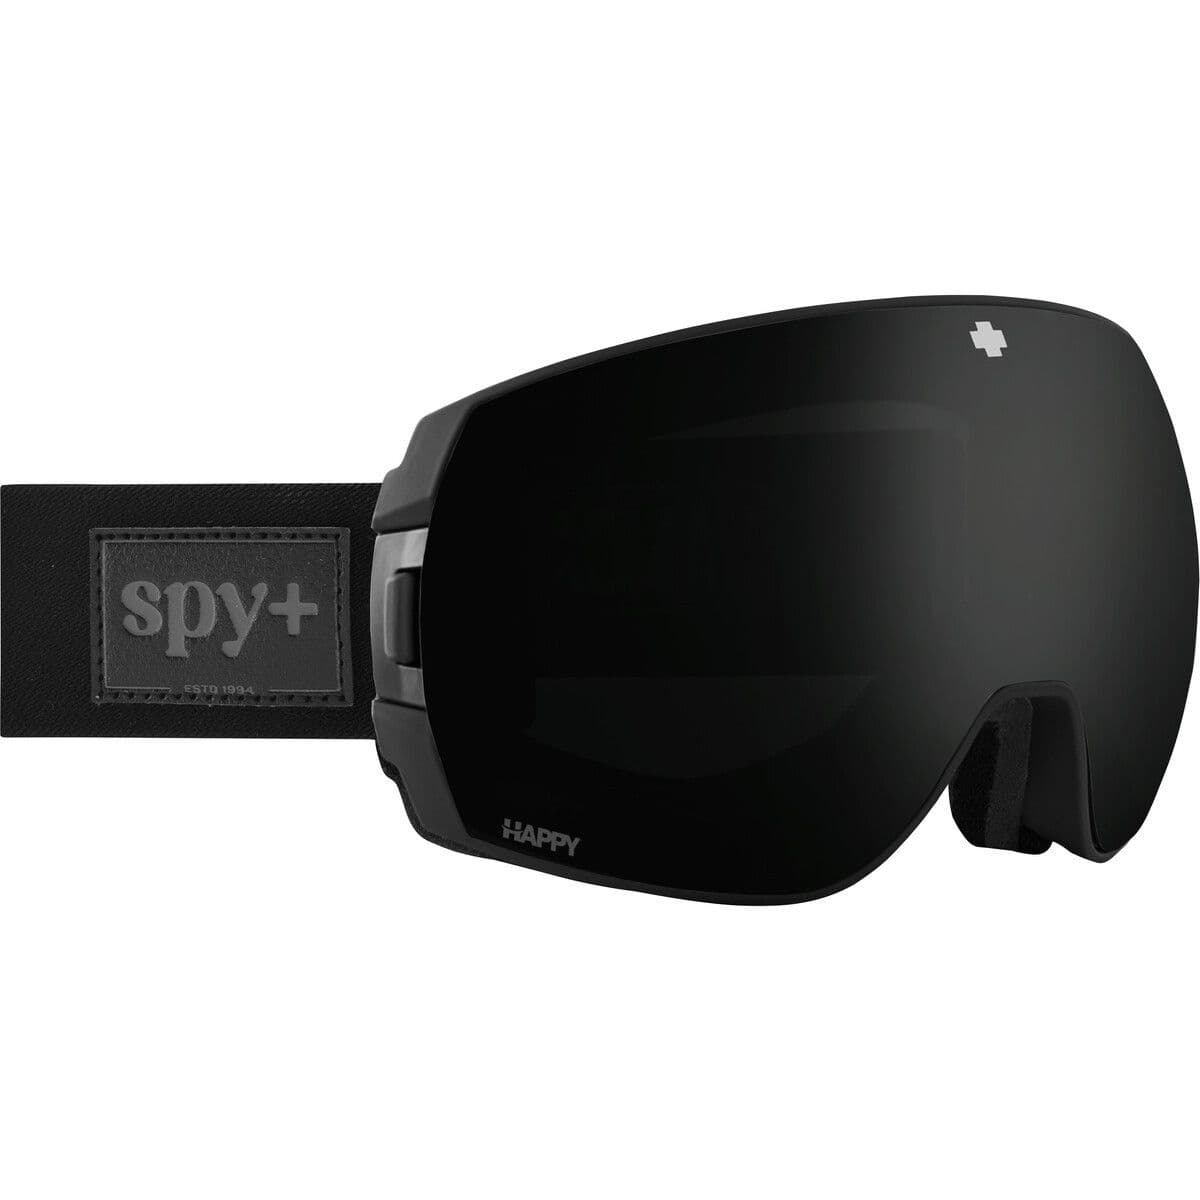 Spy Optic Legacy Snow Goggles